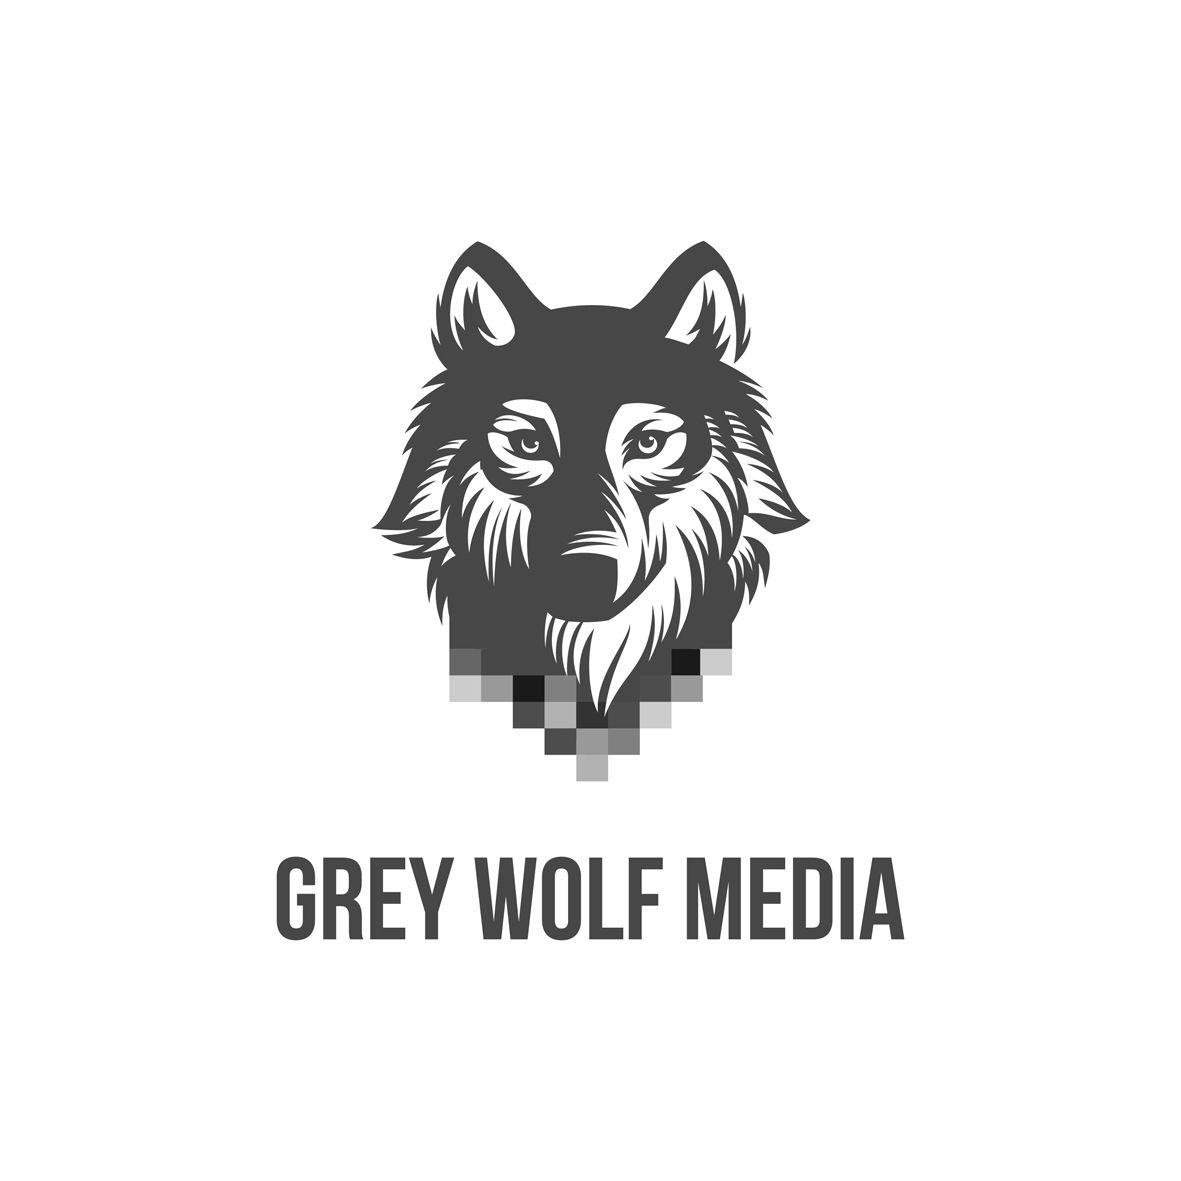 Grey Wolf Logo - Upmarket, Bold, Business Logo Design for Grey Wolf Media